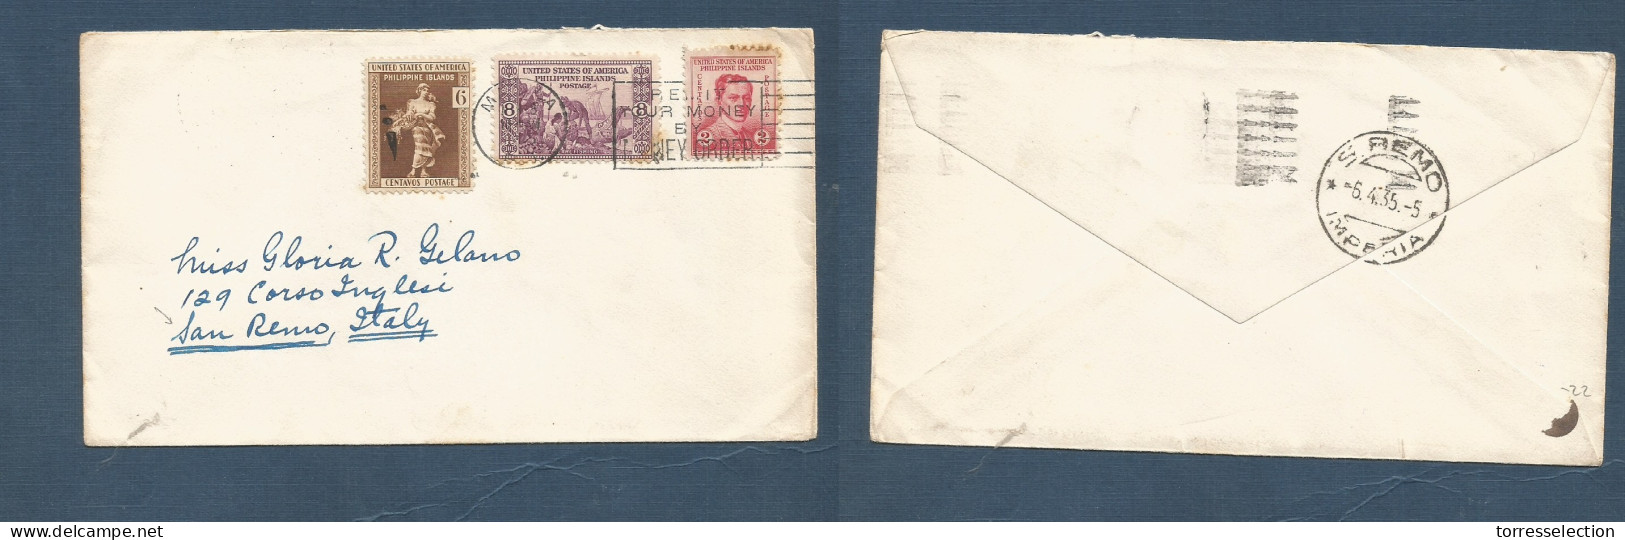 PHILIPPINES. 1935. Manila - San Remo, Italy 6 Abr. Multifkd Envelope. Family Correspondence. Better Destination. 16c Rat - Filipinas